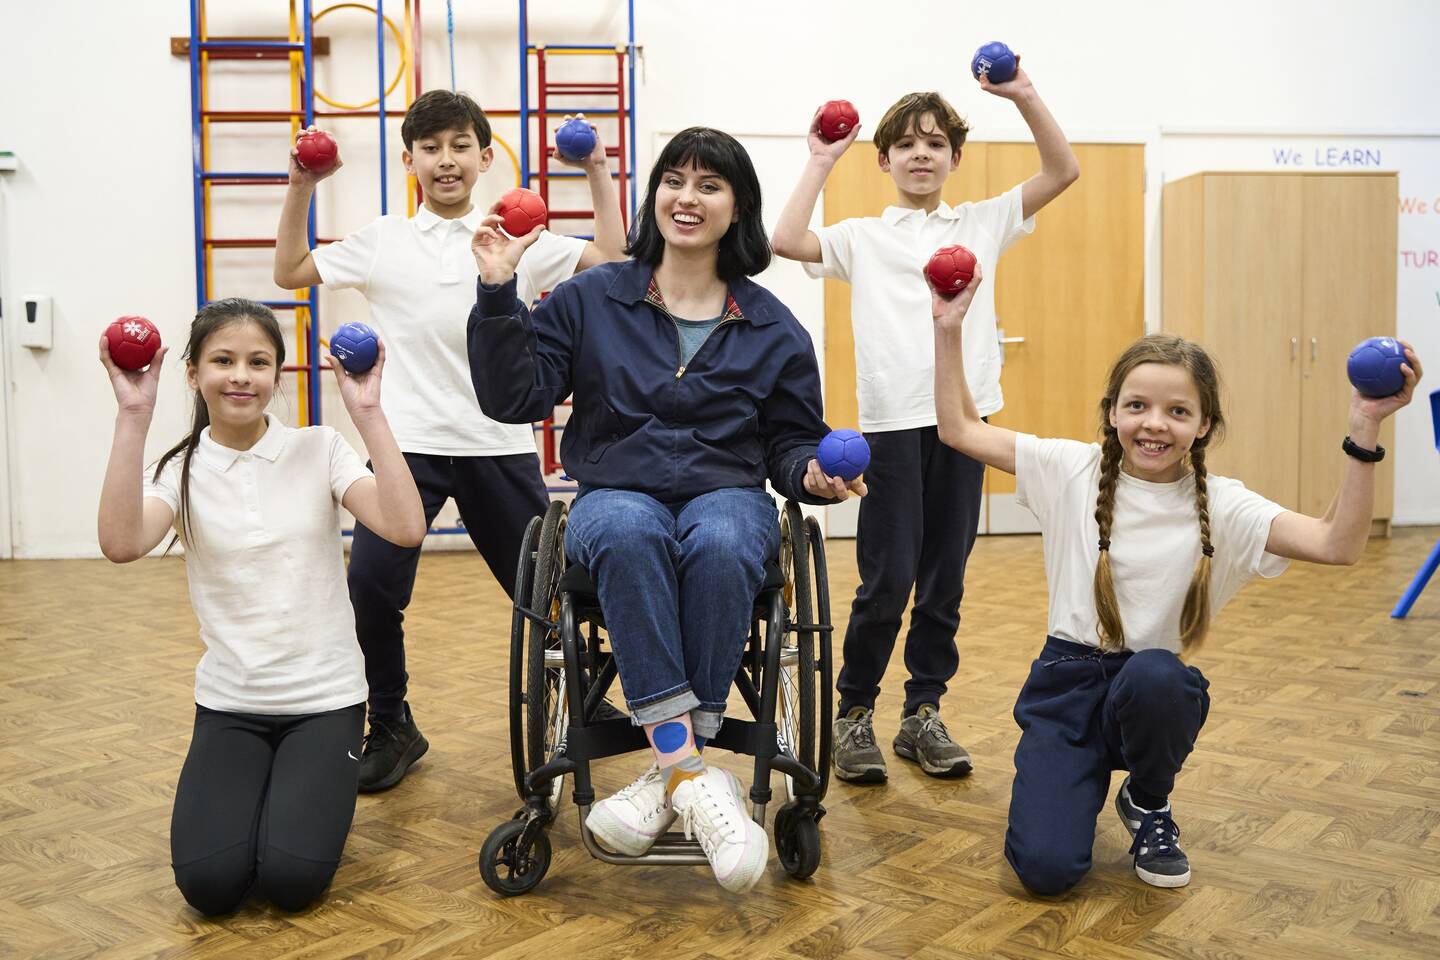 BBC presenter Abby Cook with school children holding boccia balls